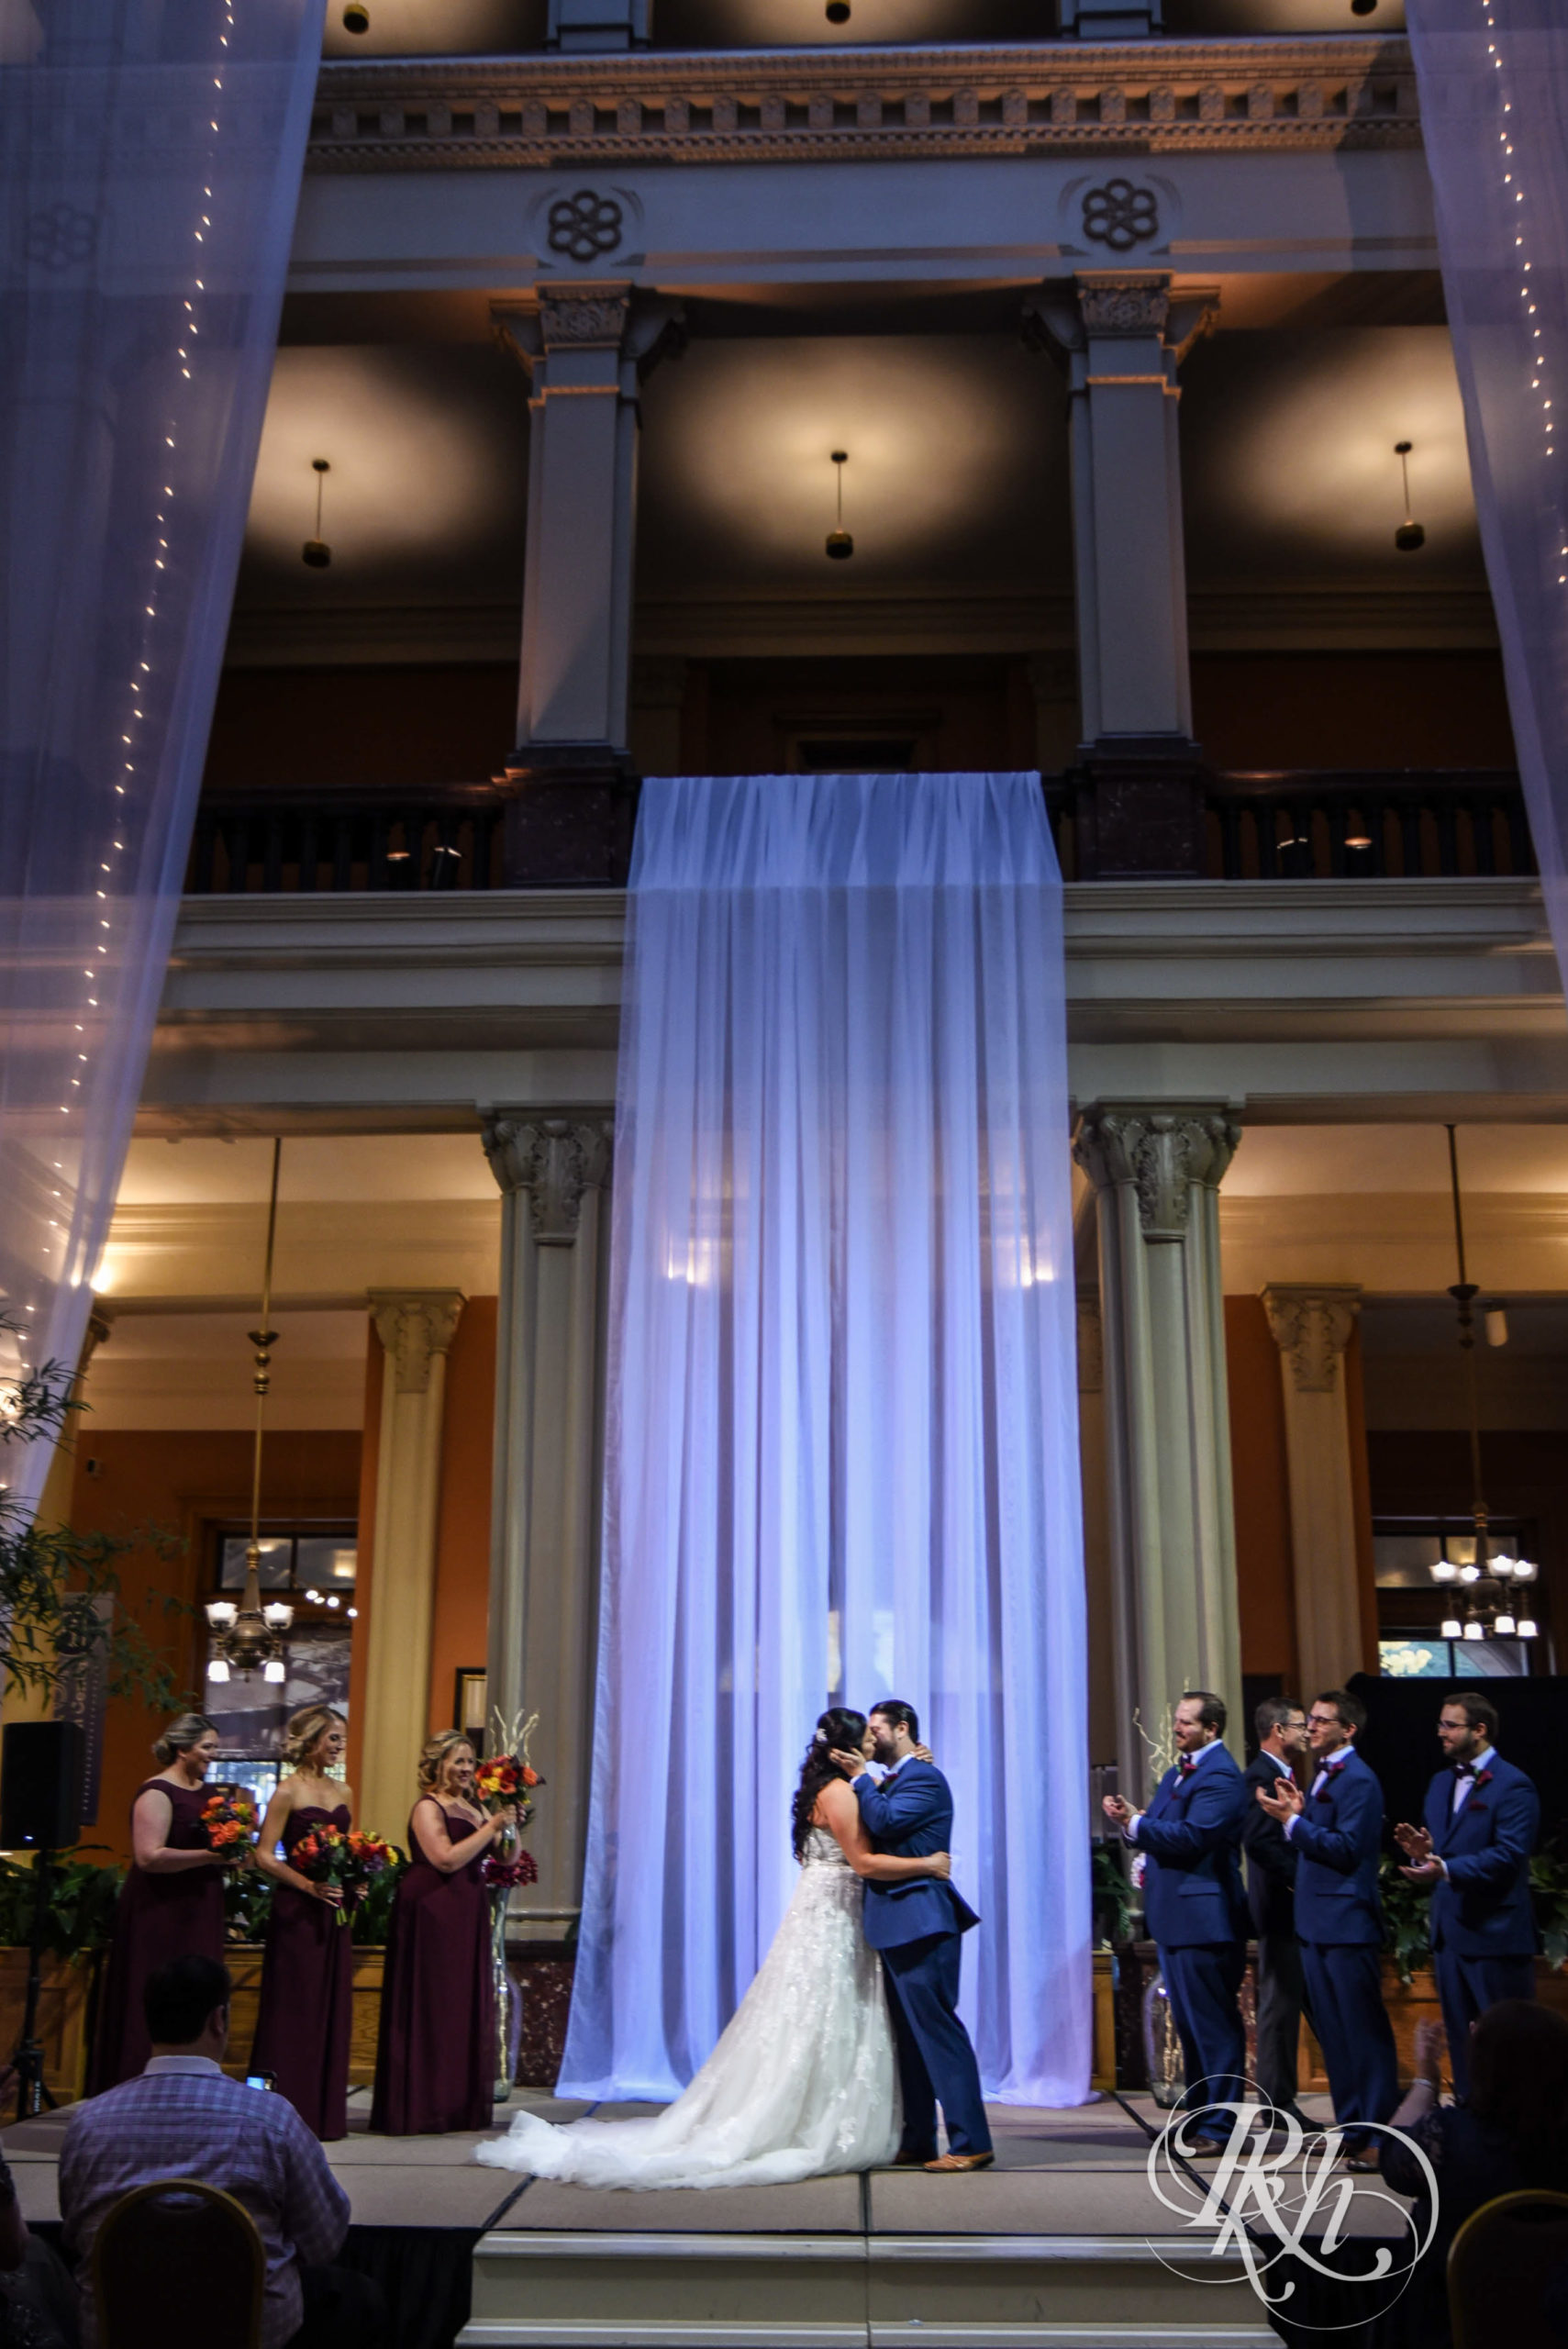 Bride and groom kiss during wedding ceremony at Landmark Center in Saint Paul, Minnesota.